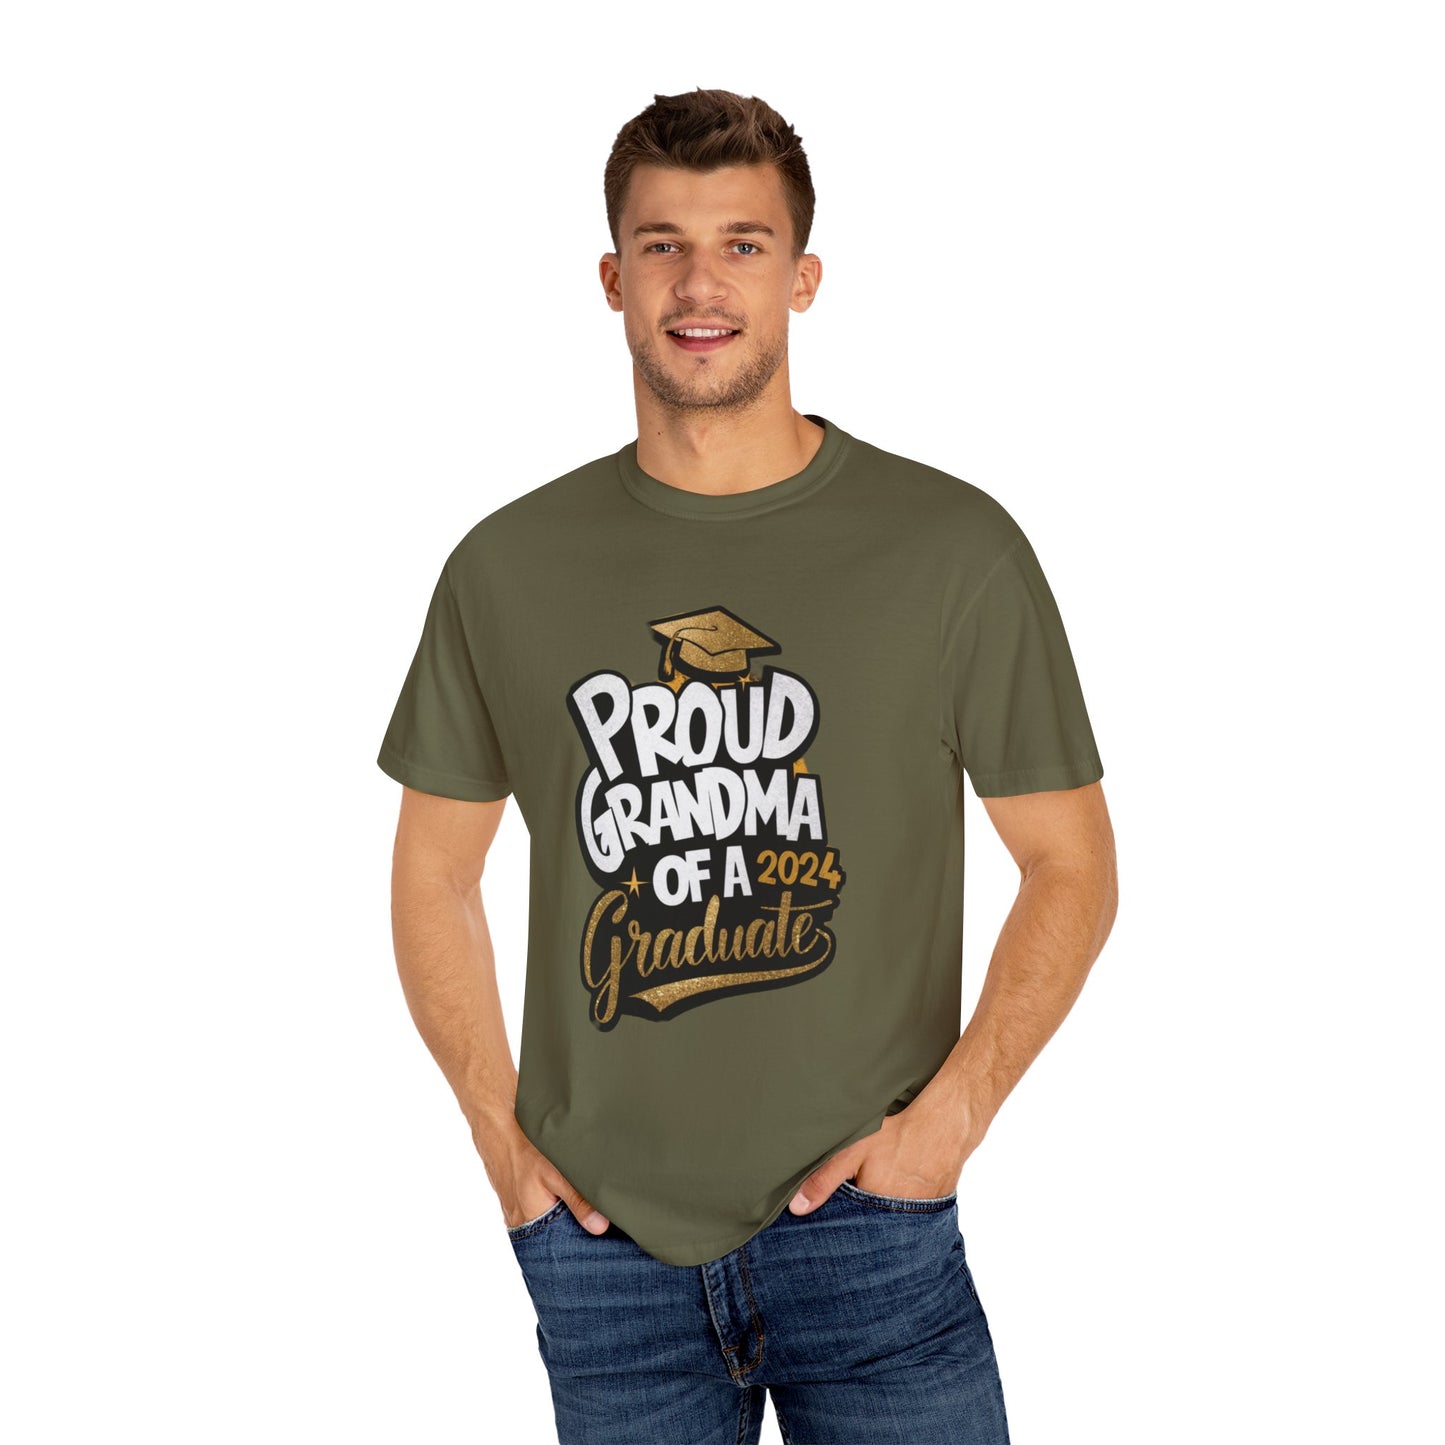 Proud of Grandma 2024 Graduate Unisex Garment-dyed T-shirt Cotton Funny Humorous Graphic Soft Premium Unisex Men Women Sage T-shirt Birthday Gift-54